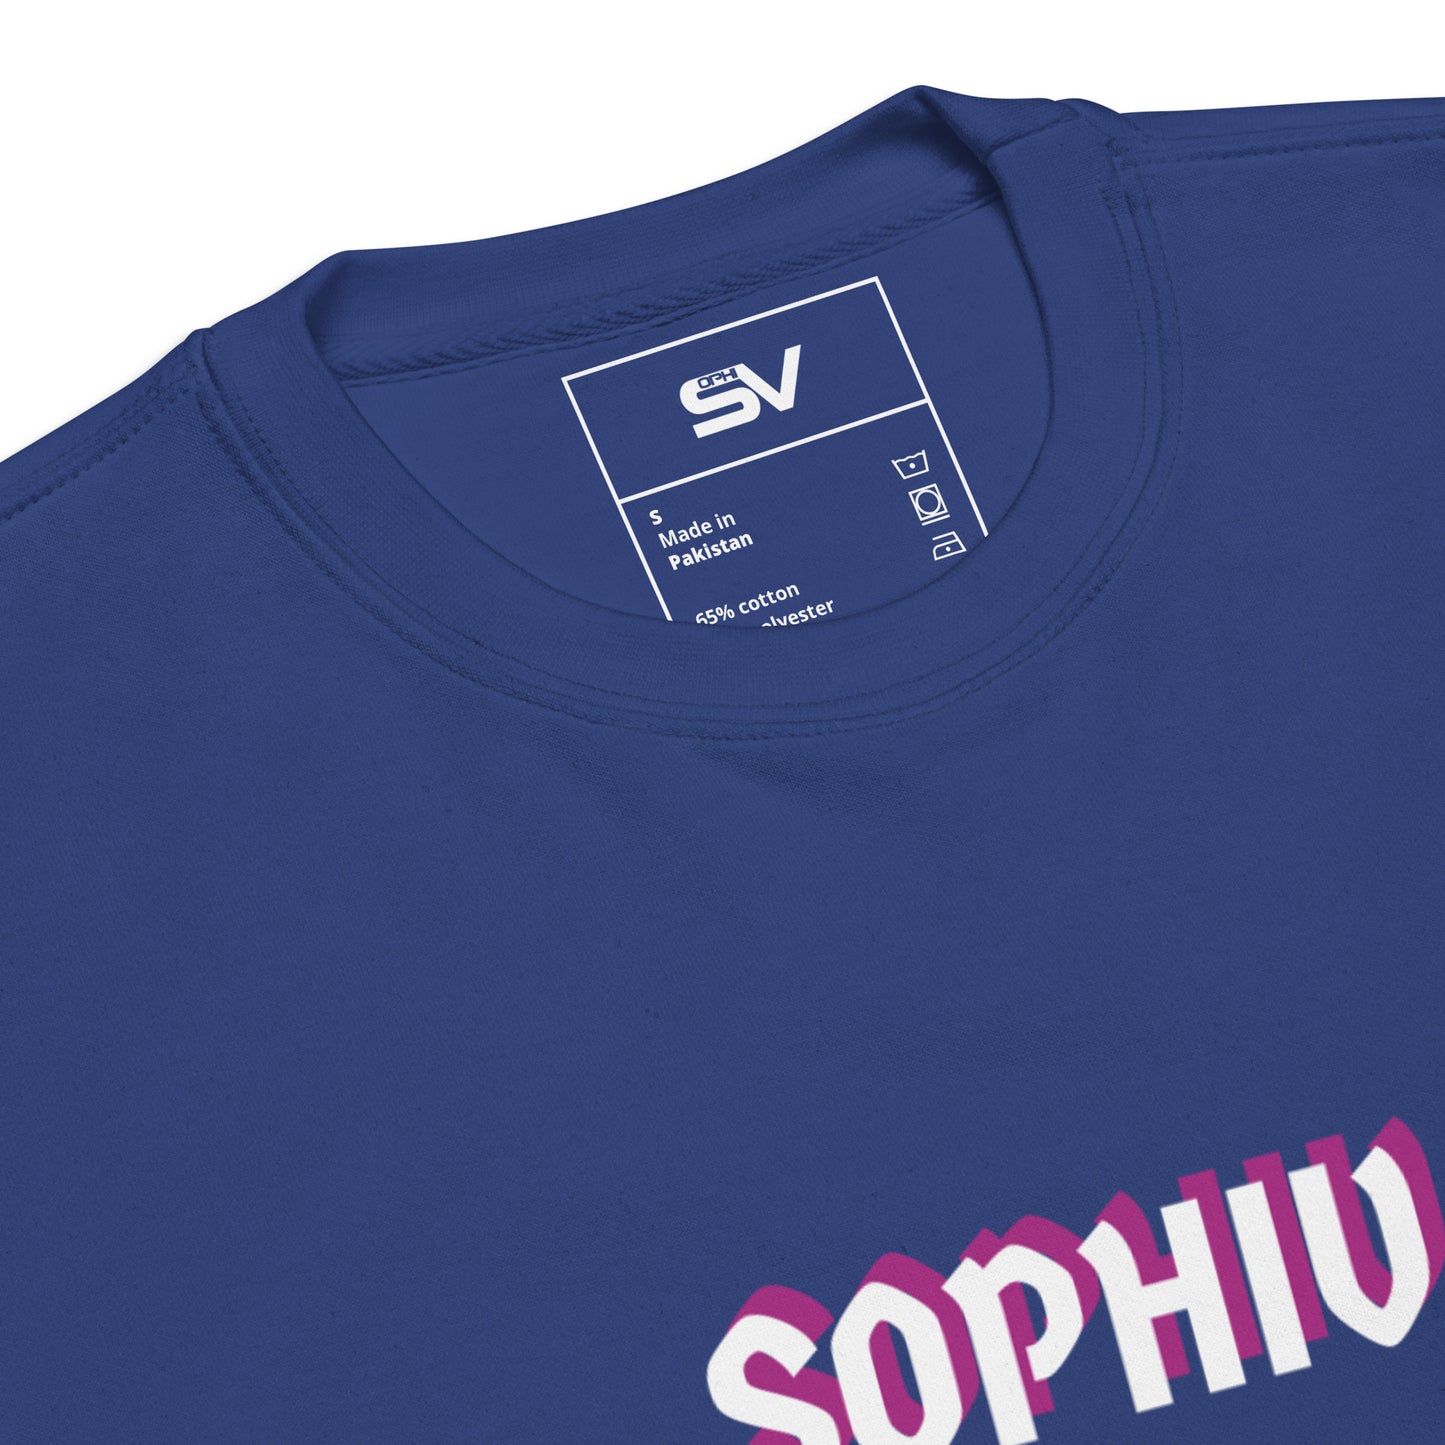 SOPHIV - Unisex Sweatshirt